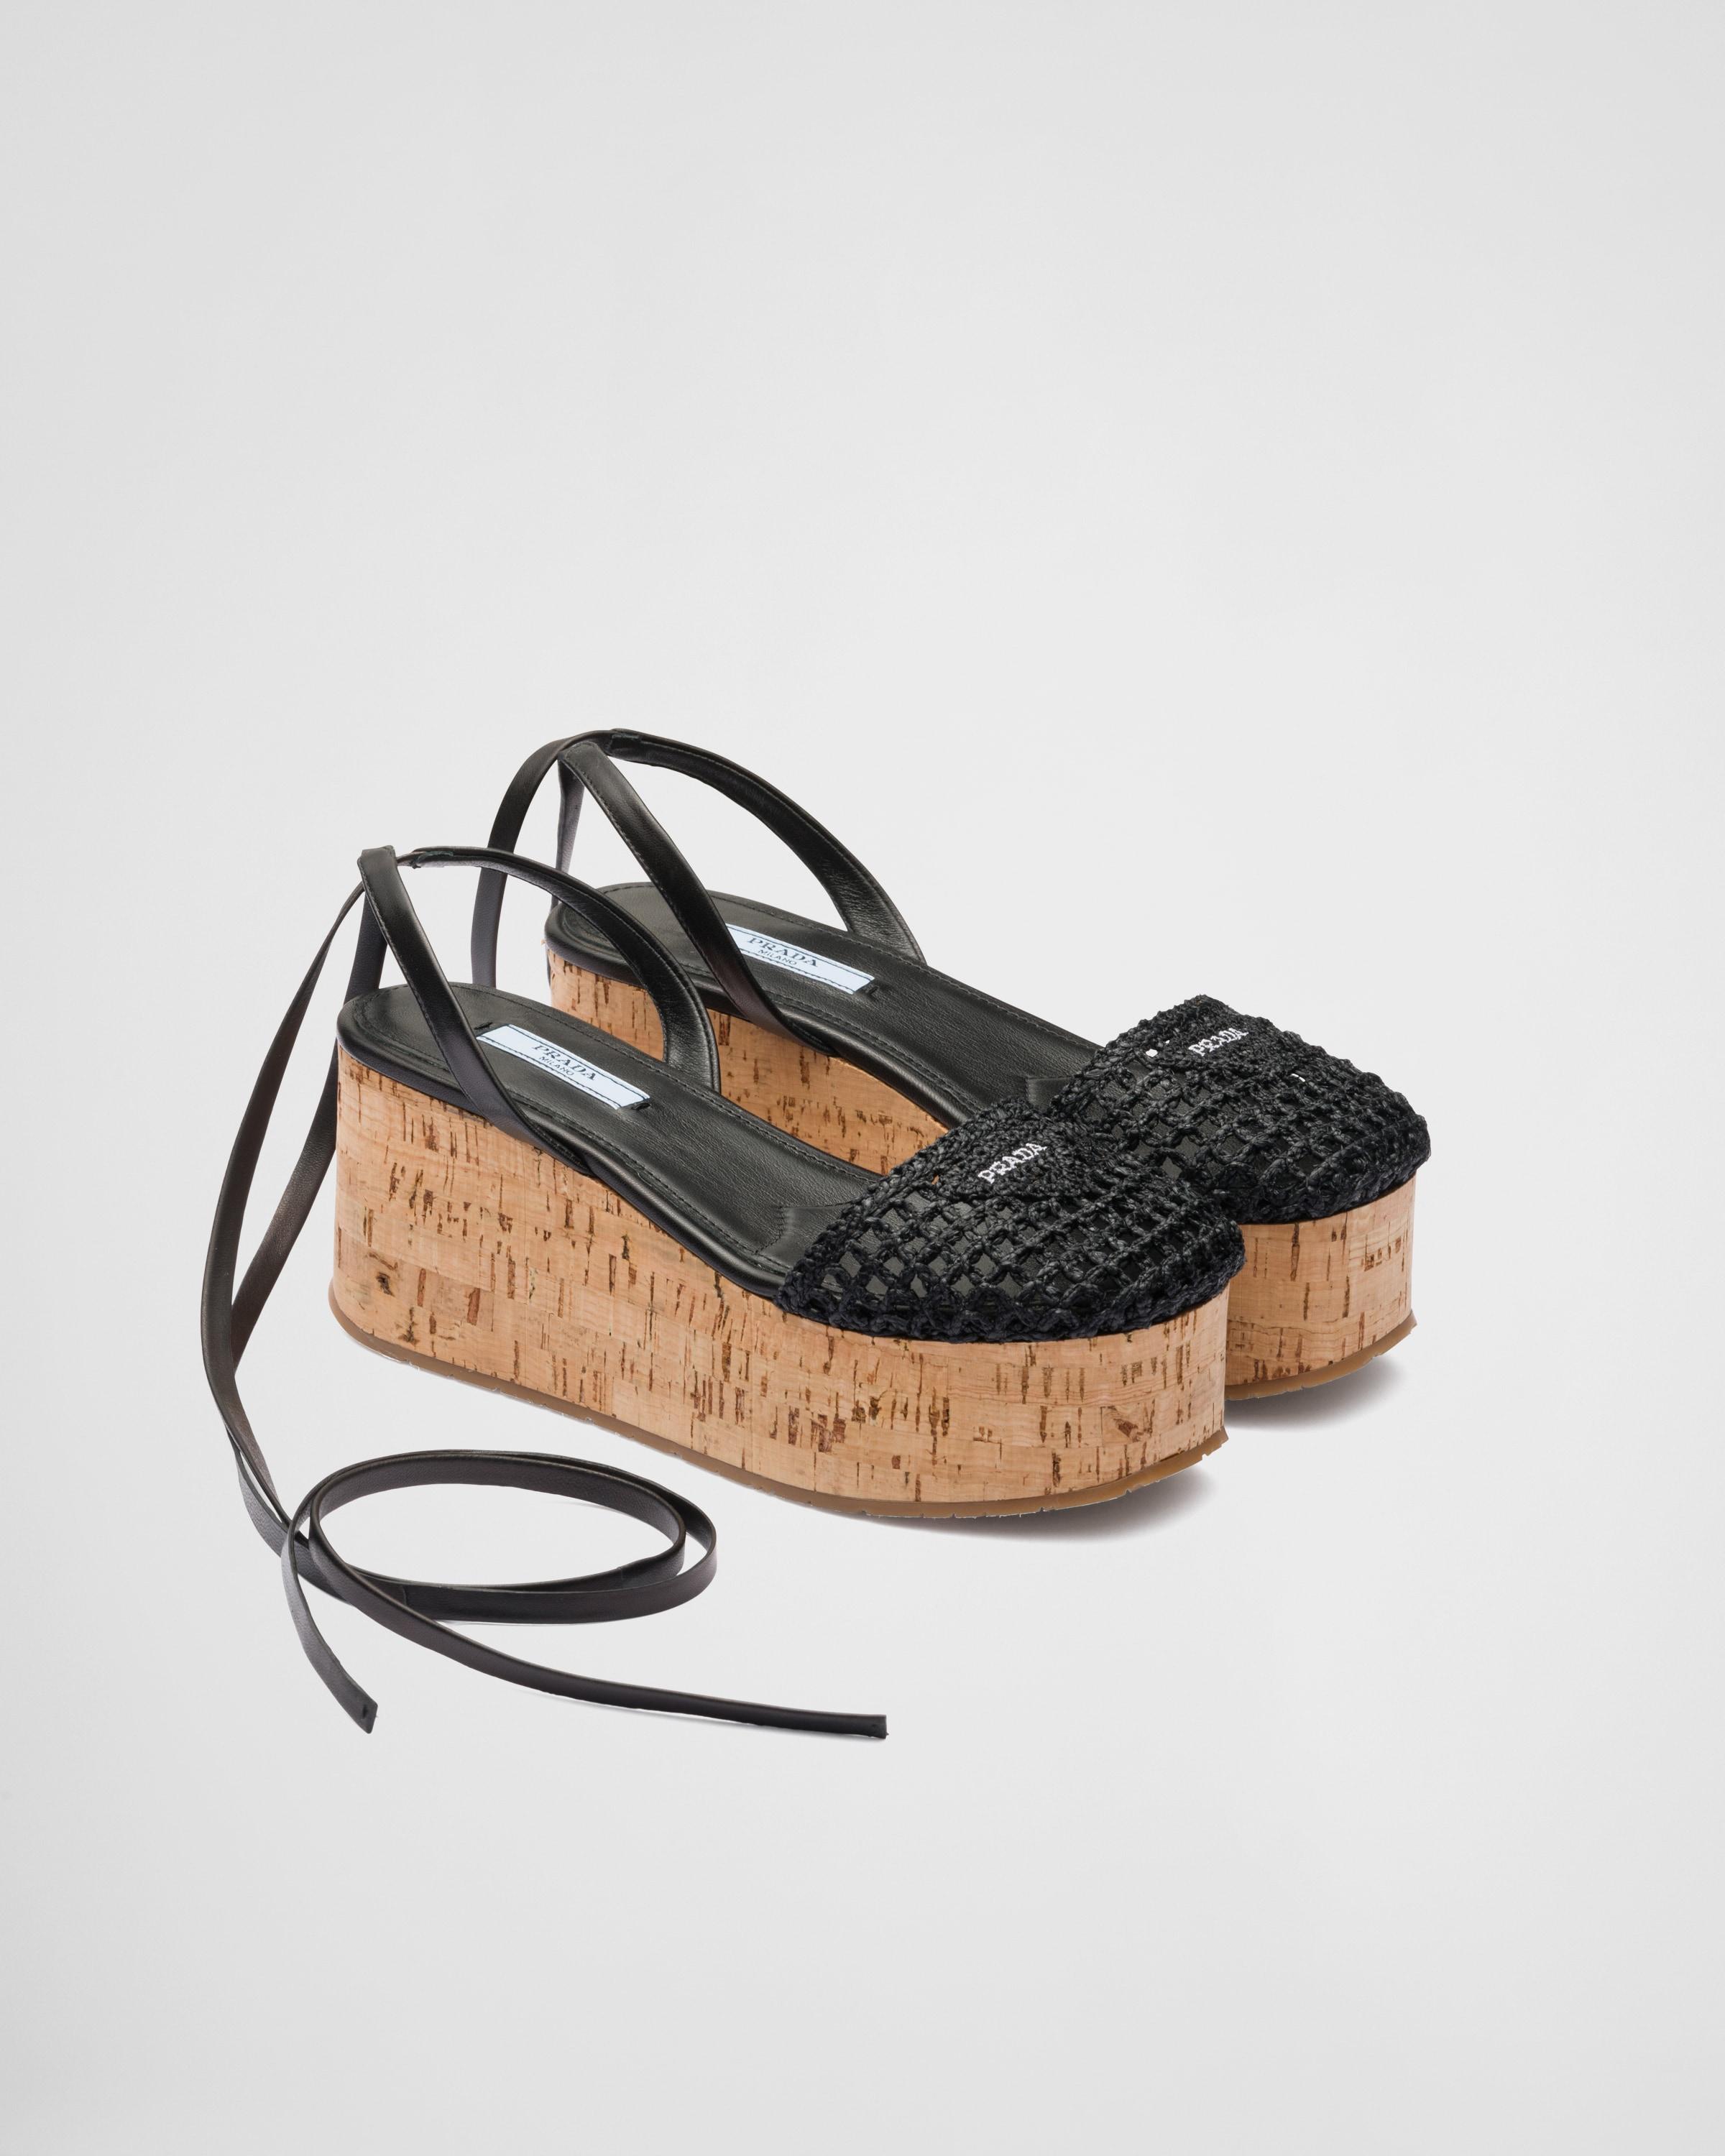 Prada Raffia Wedge Sandals in Black | Lyst